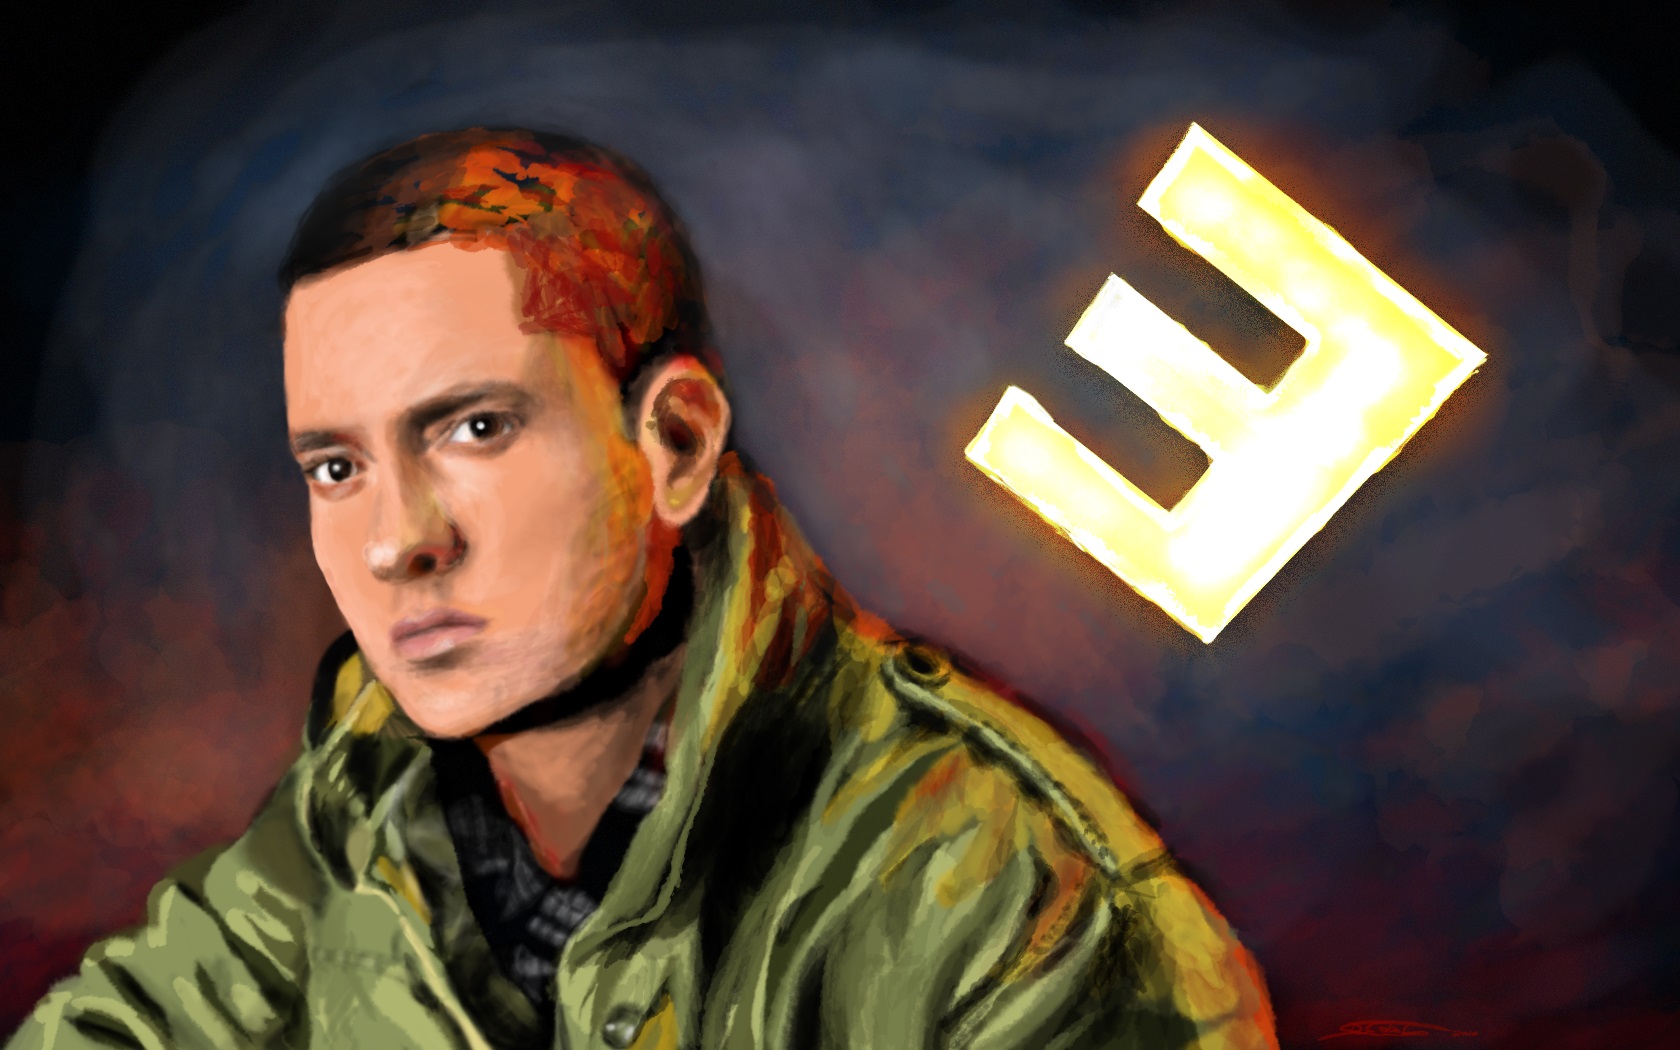 Eminem portrait by Darian Cabot